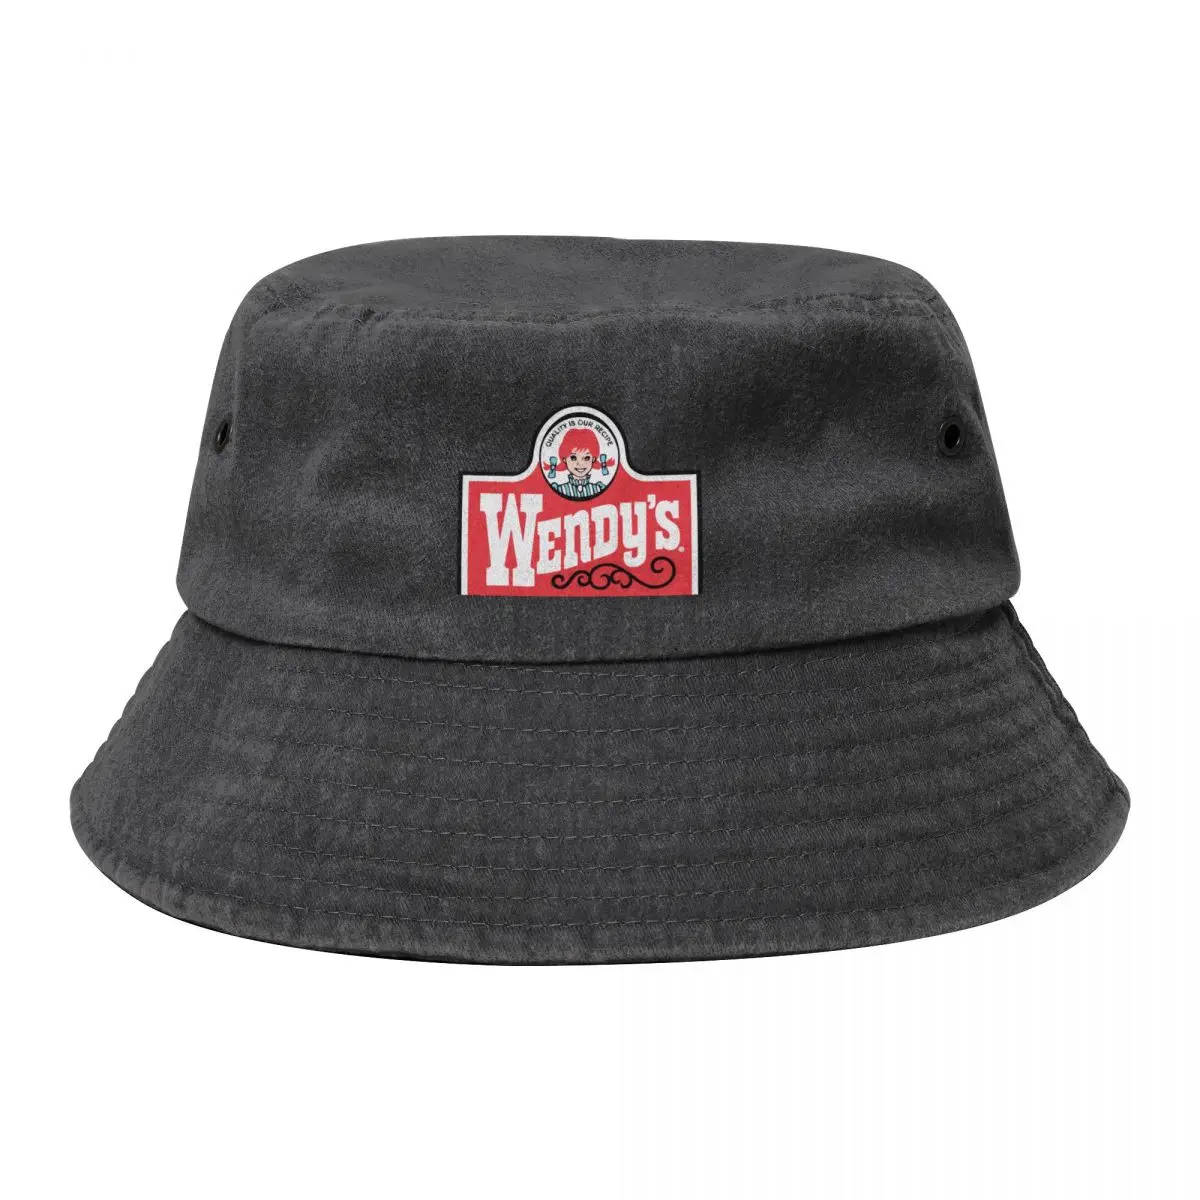 

Wendy's retro Bucket Hat New In The Hat Beach Outing beach hat Trucker Hats For Men Women's